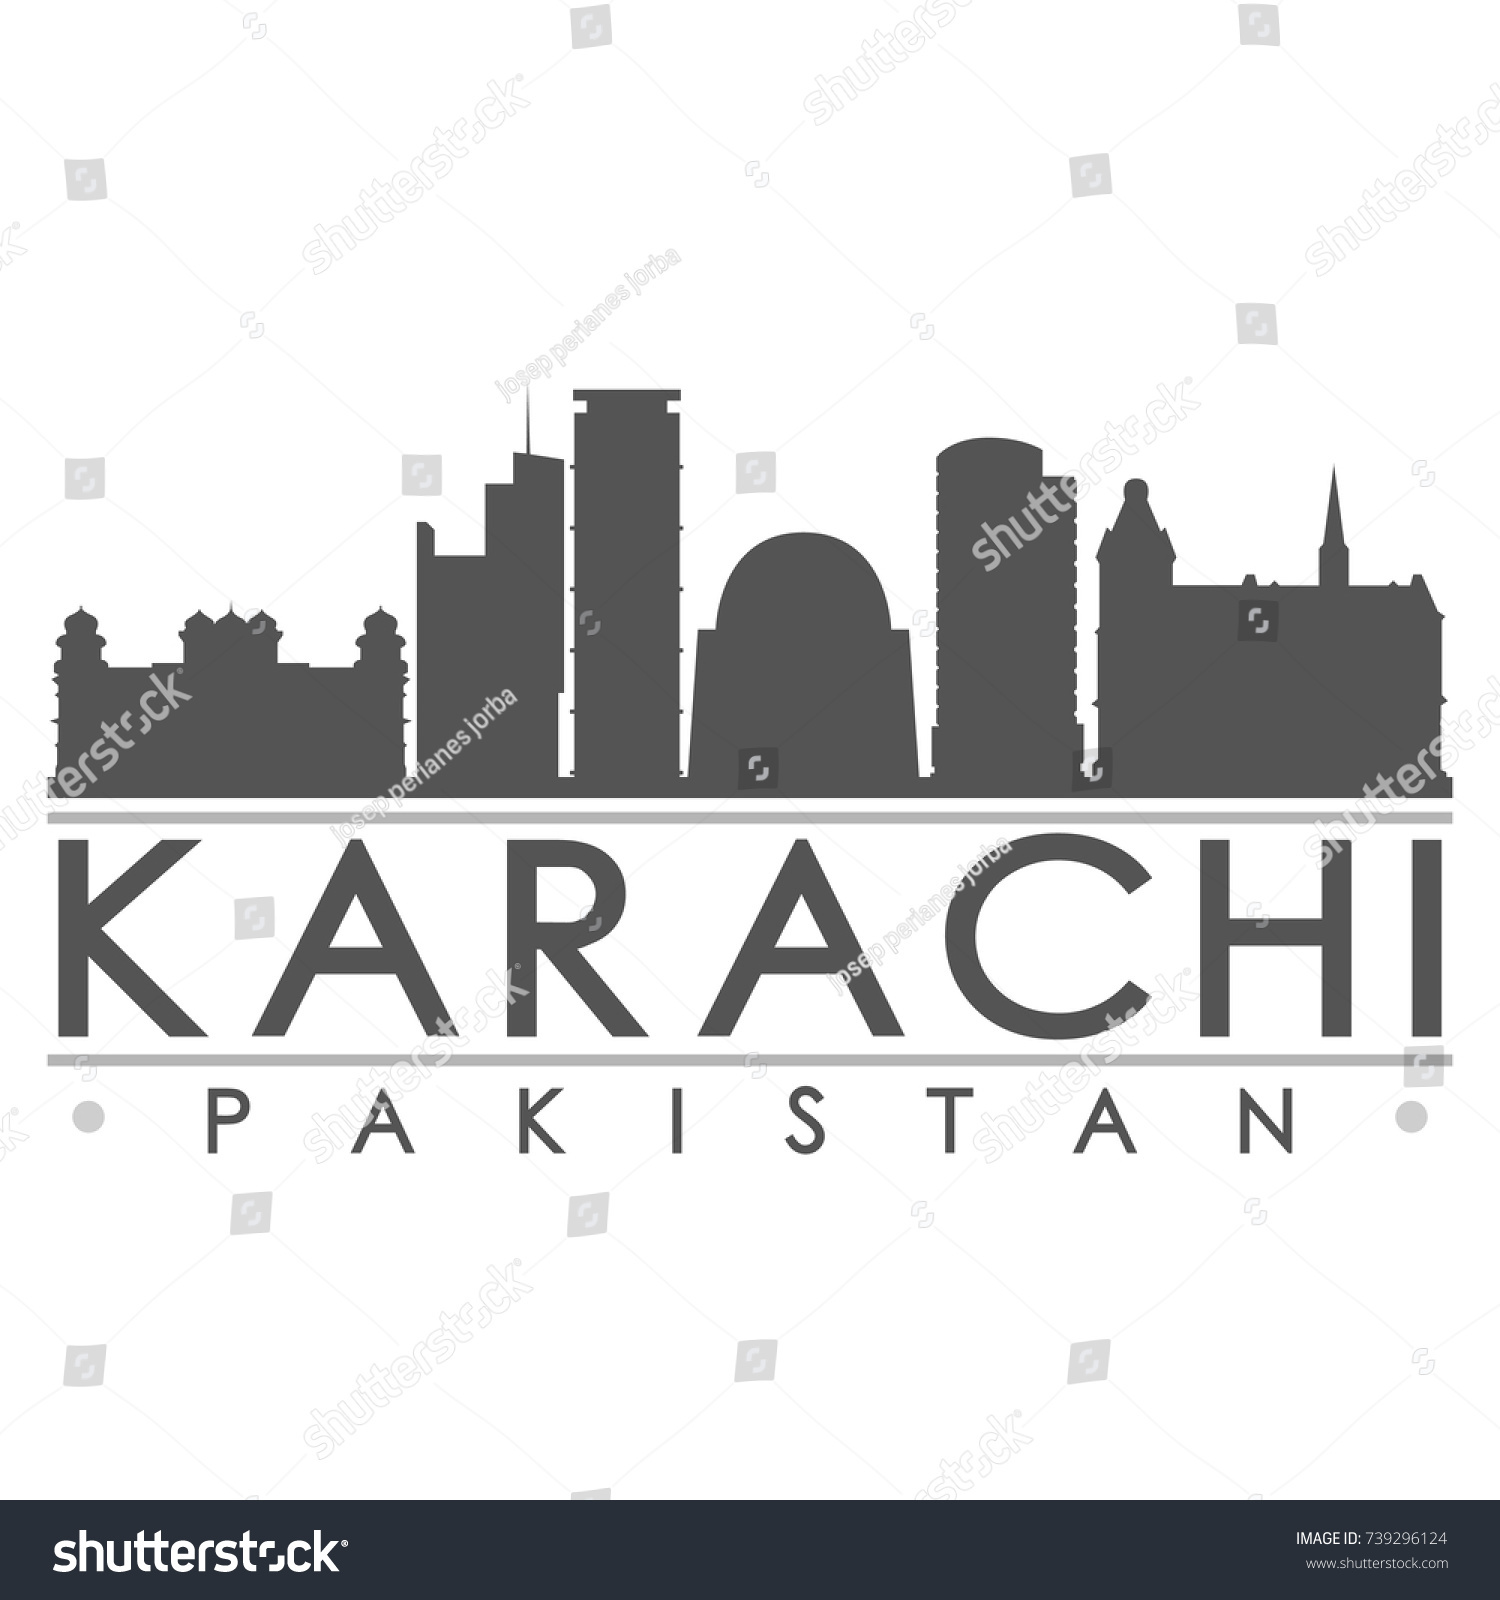 Karachi Pakistan Skyline Silhouette Design City Vector Art Famous Buildings #739296124